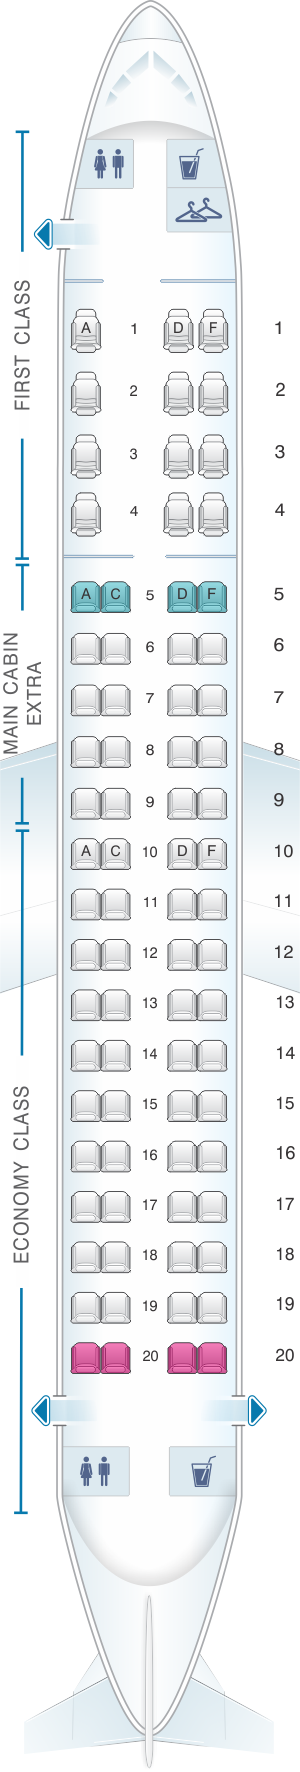 Seat Map American Airlines Embraer Erj 175 V1 Seatmaestro